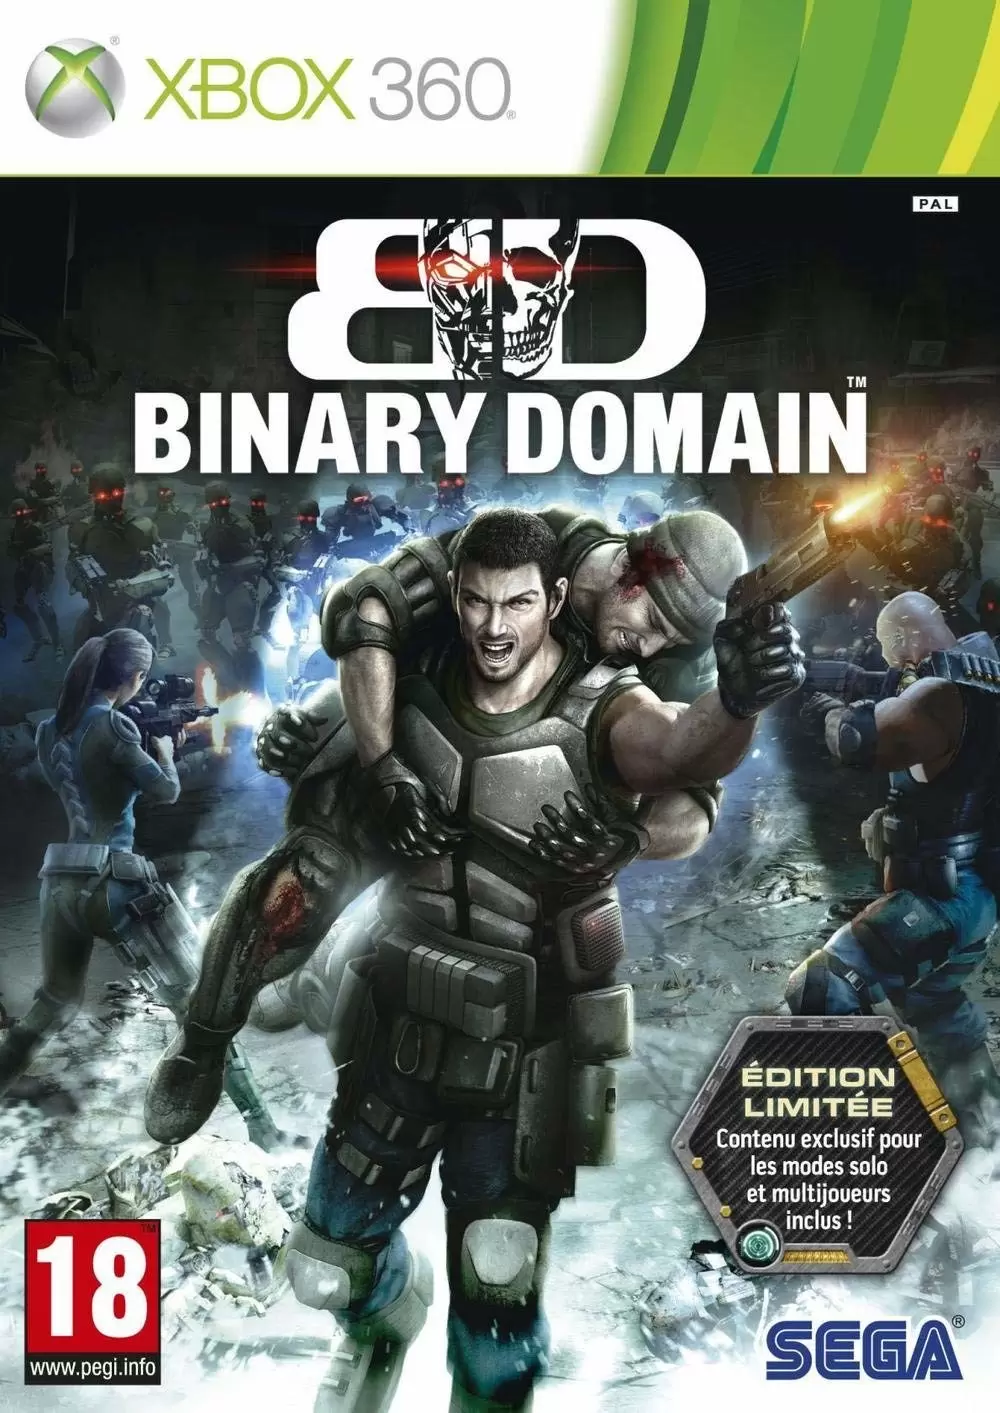 XBOX 360 Games - Binary Domain Edition Limitée